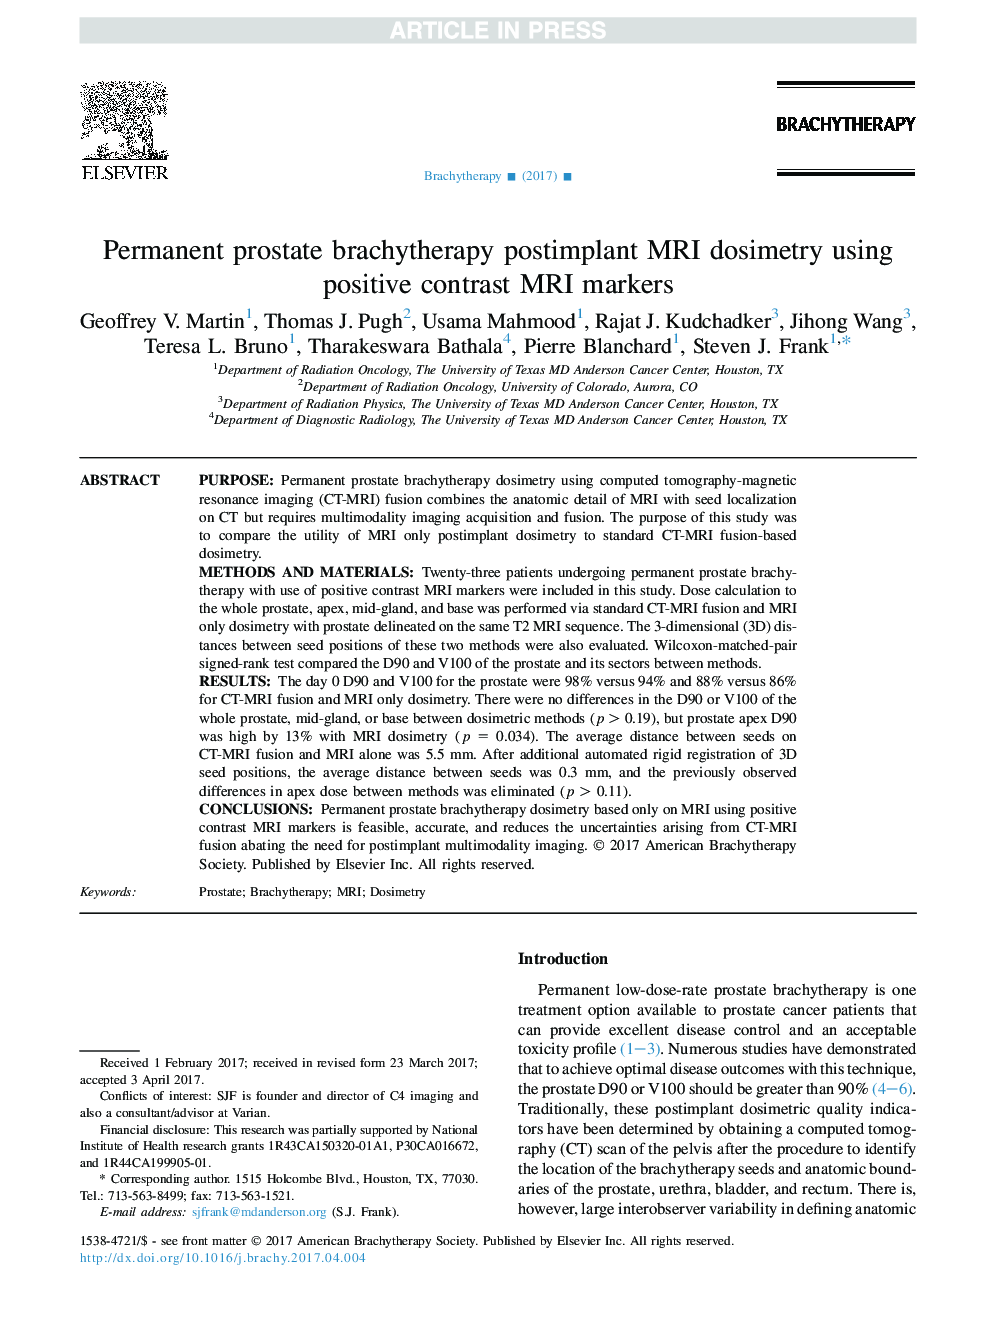 Permanent prostate brachytherapy postimplant magnetic resonance imaging dosimetry using positive contrast magnetic resonance imaging markers